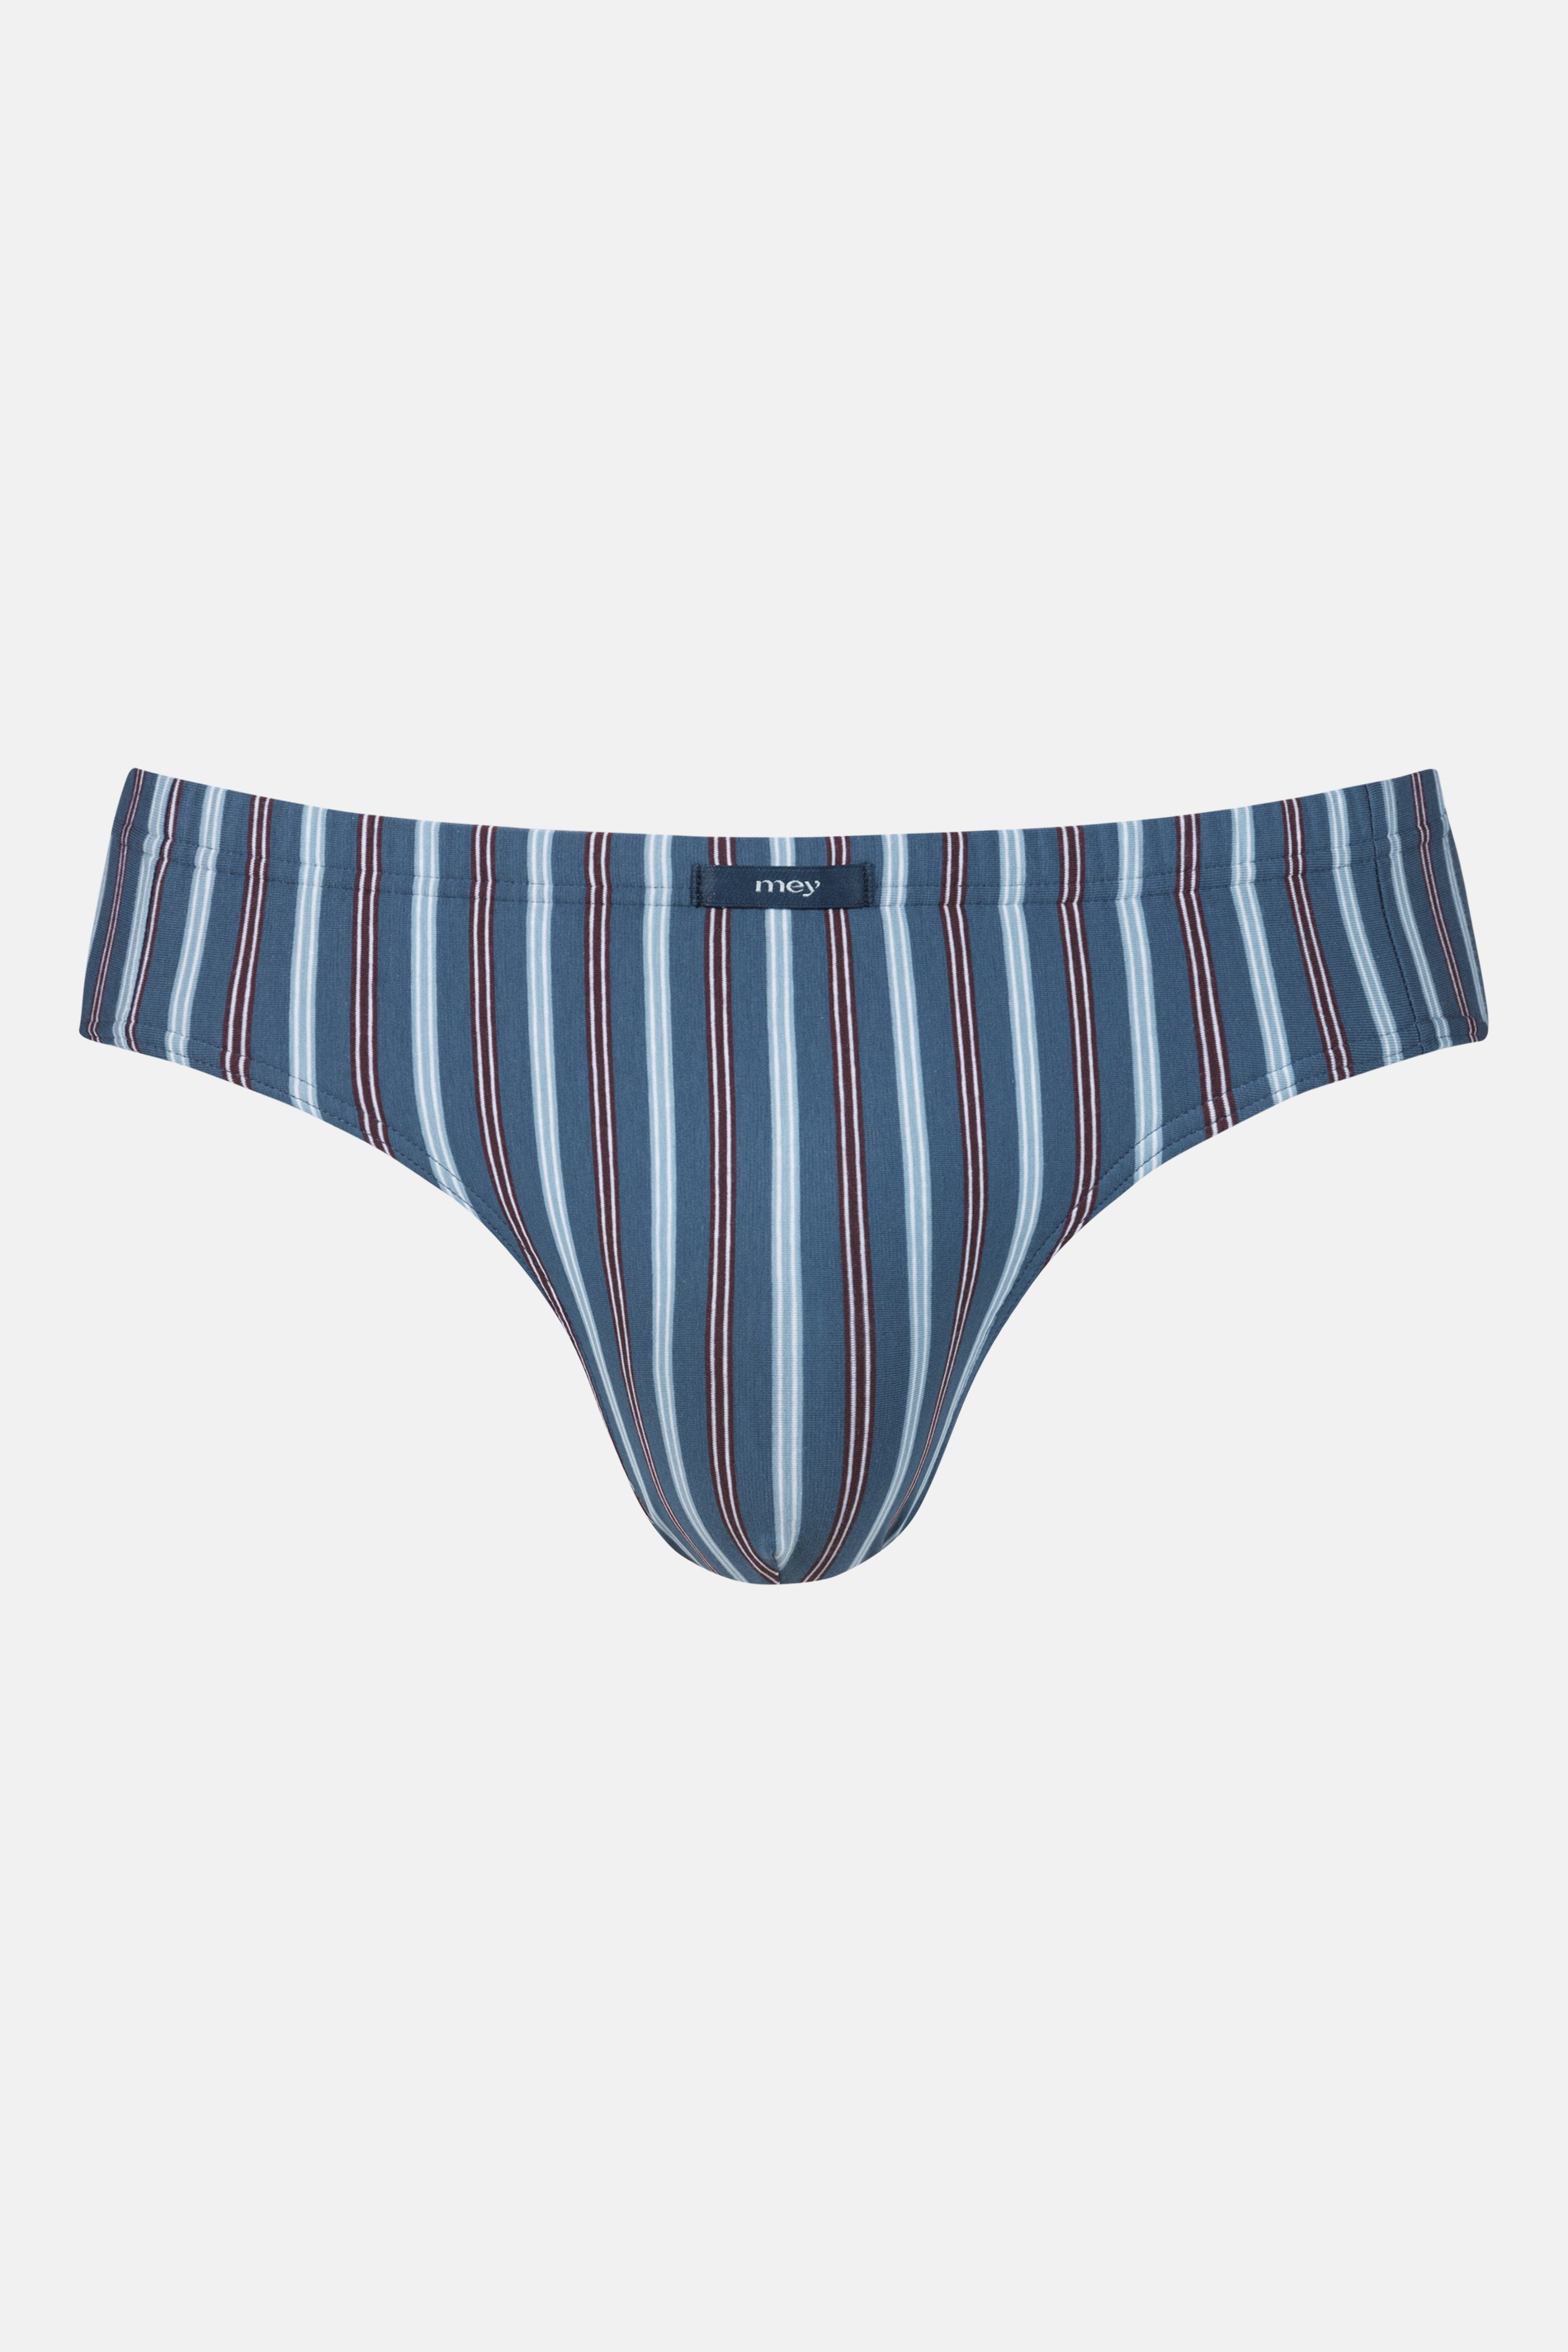 Jazz-pants Serie Blue Striped Uitknippen | mey®